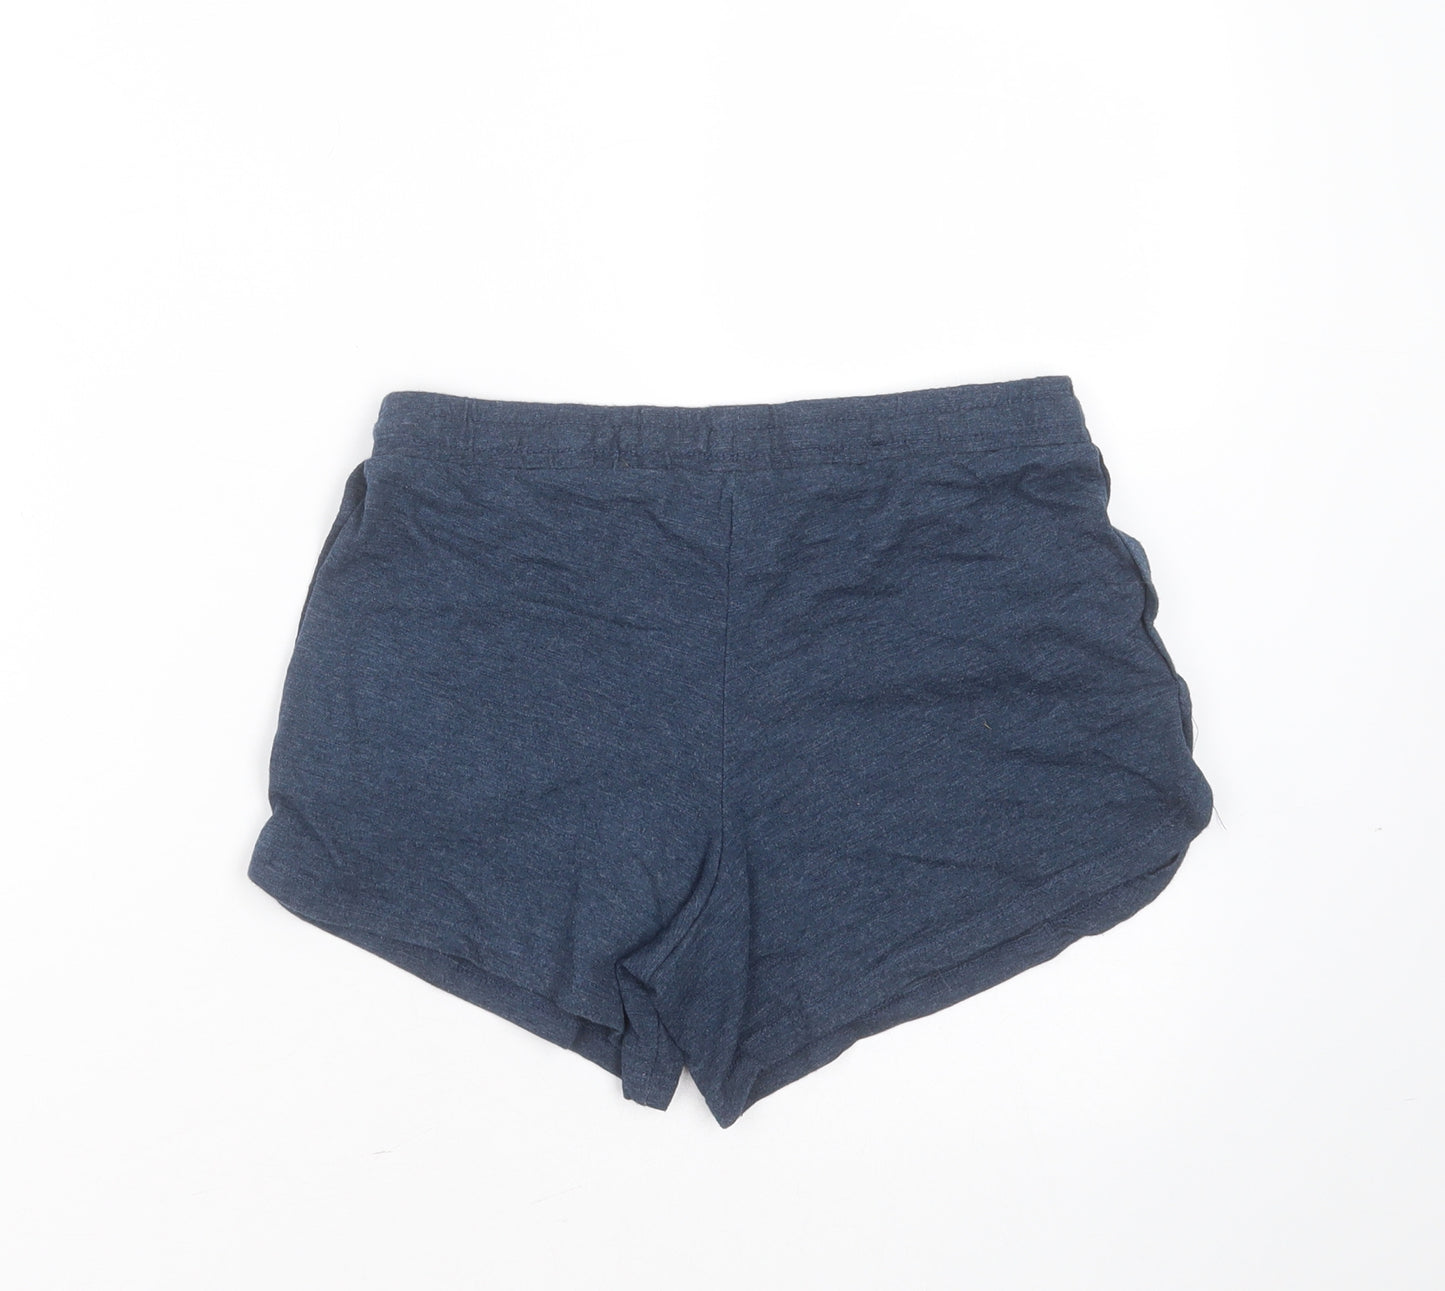 Mountain Warehouse Girls Blue  Cotton Hot Pants Shorts Size 11-12 Years  Regular